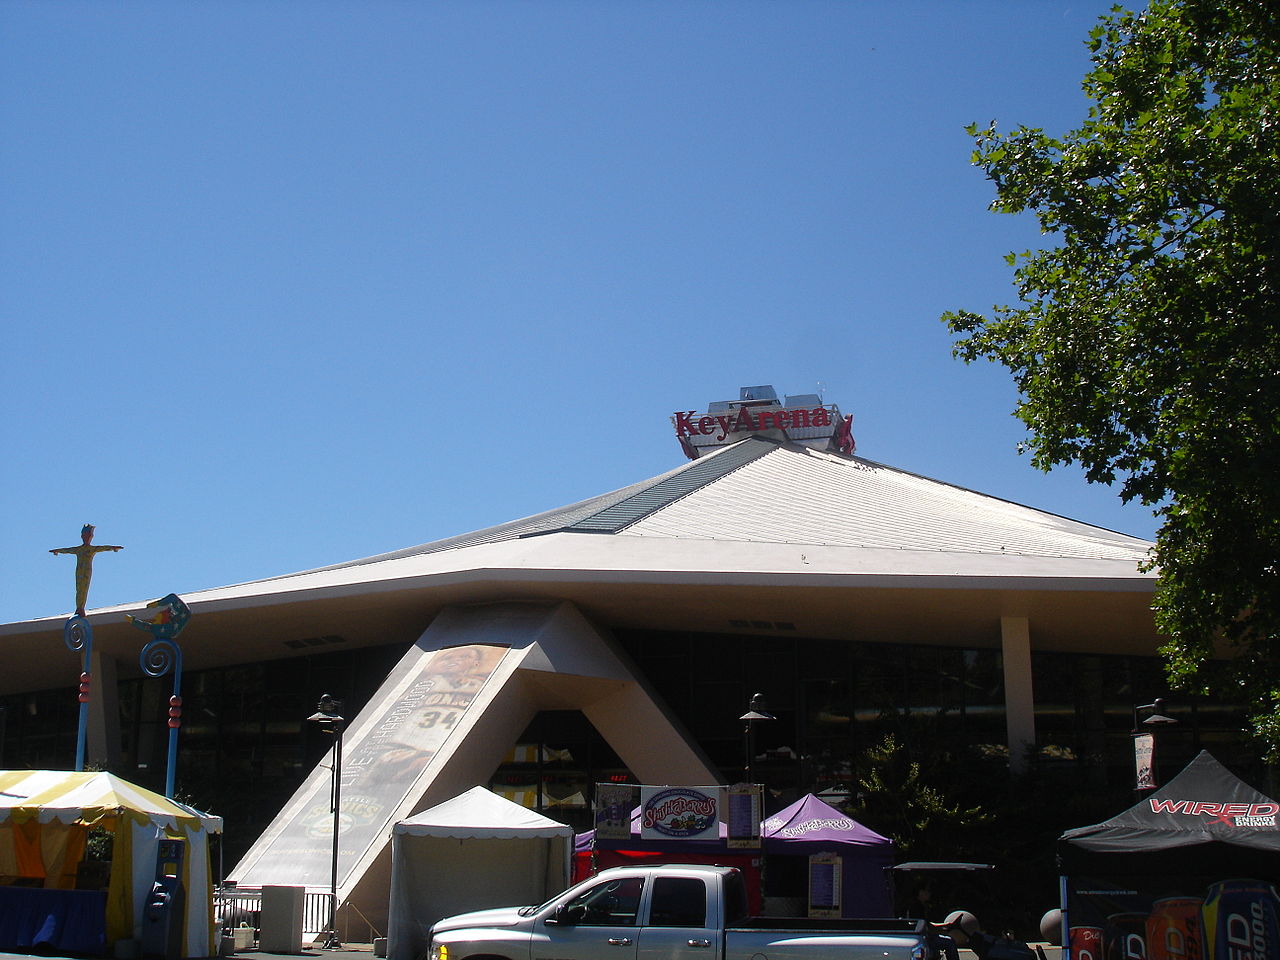 Key Arena